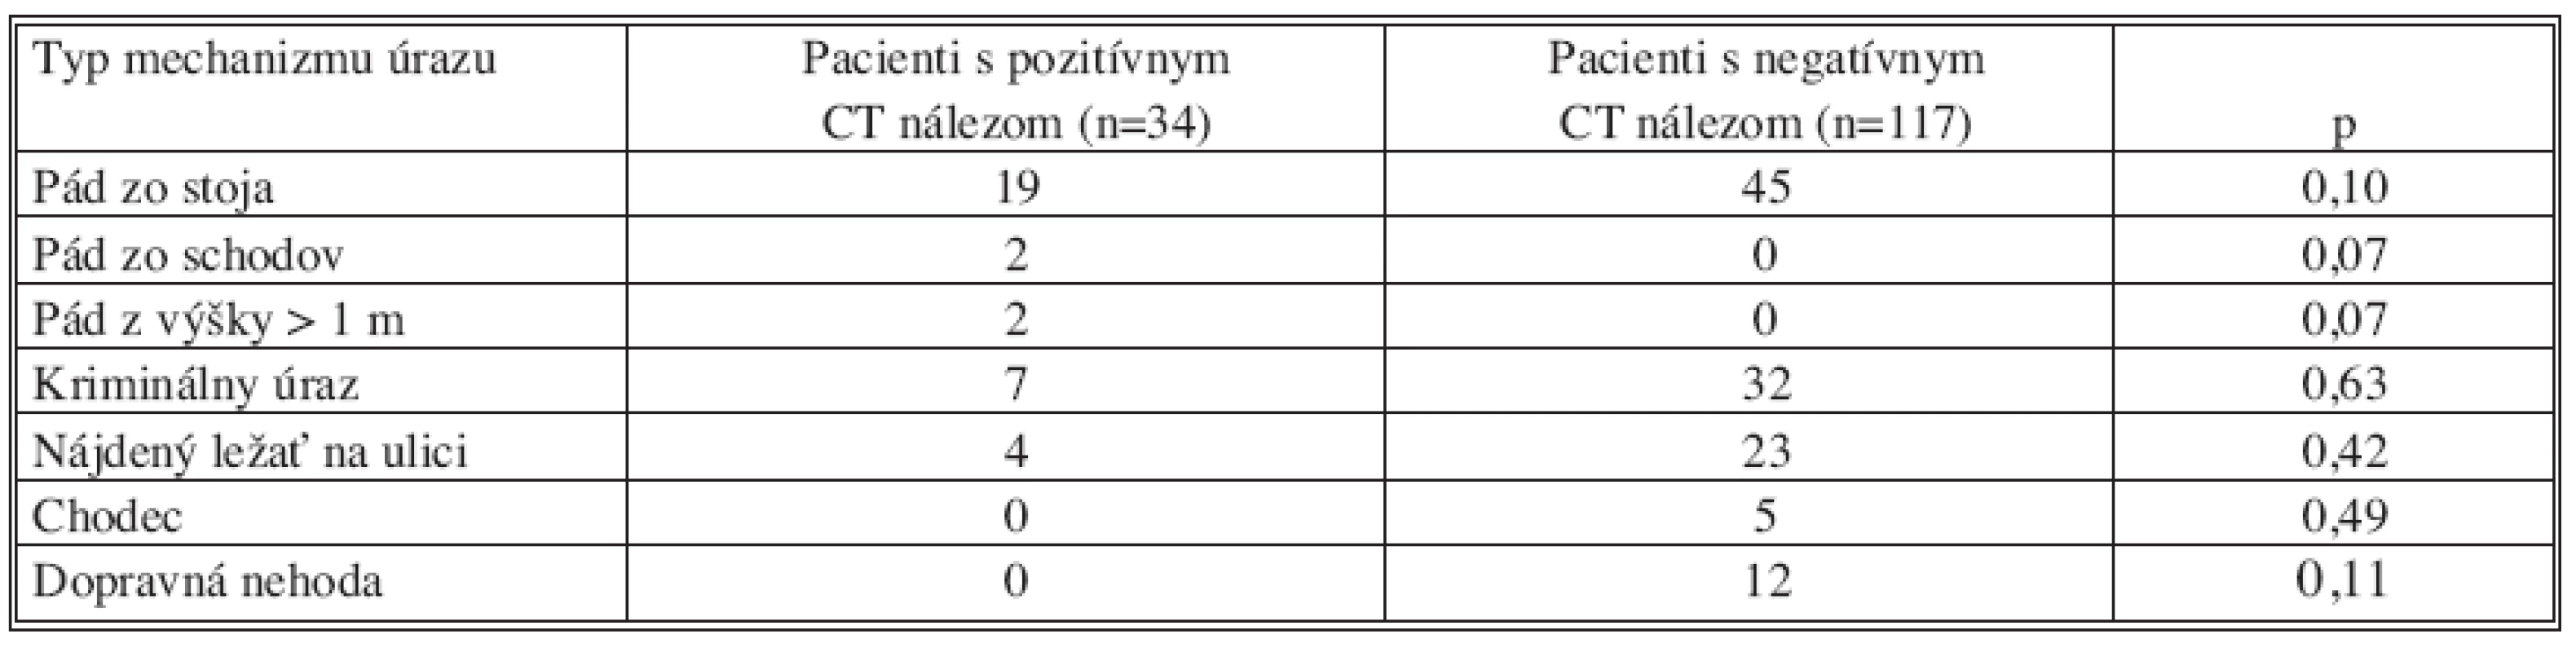 Mechanizmus úrazu etylizovaných pacientov (n = 151)
Tab. 3. Mechanisms of injuries in the ethylized patients (n = 151)